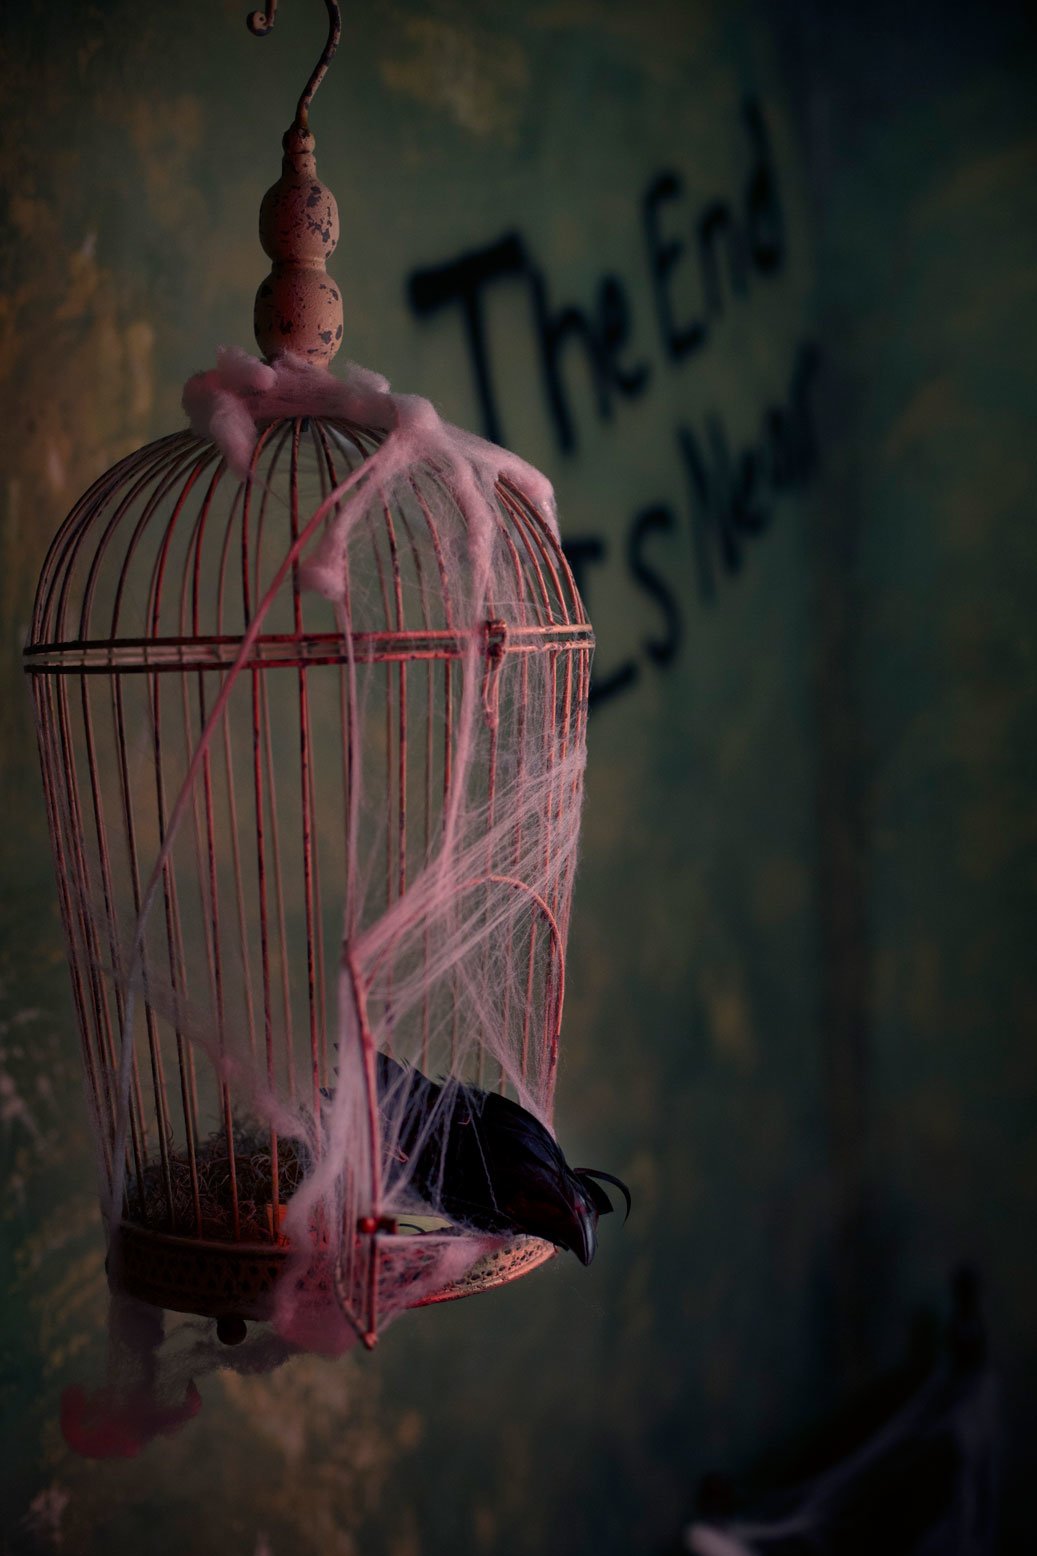 Insane Asylum Room - Abandoned Bird Cage